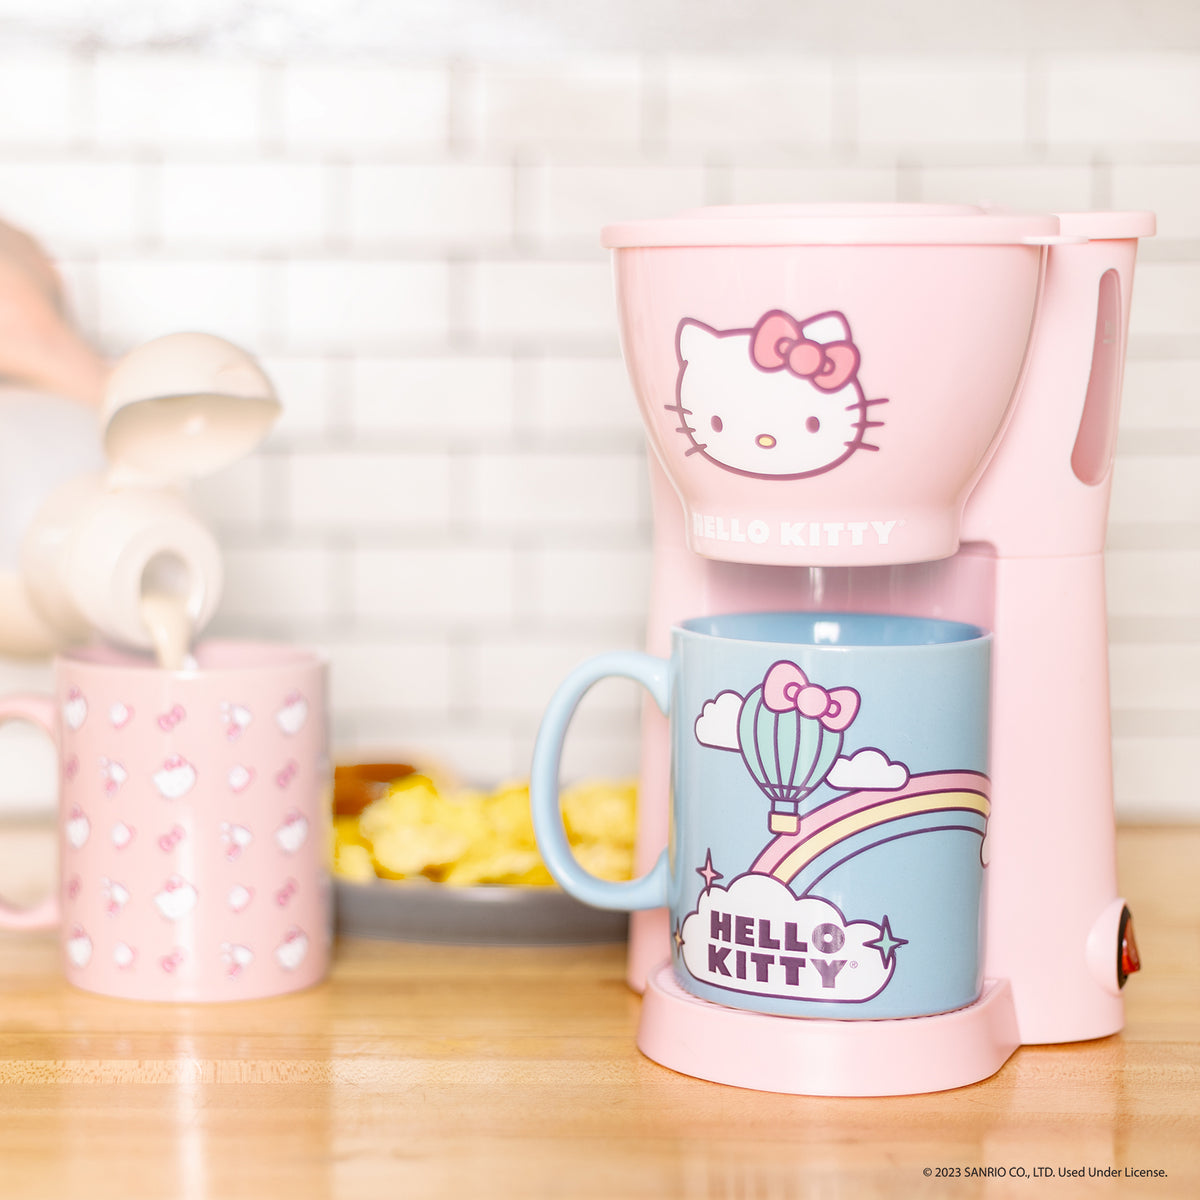 Hello Kitty Coffee Maker Gift Set wtih 2 Mugs